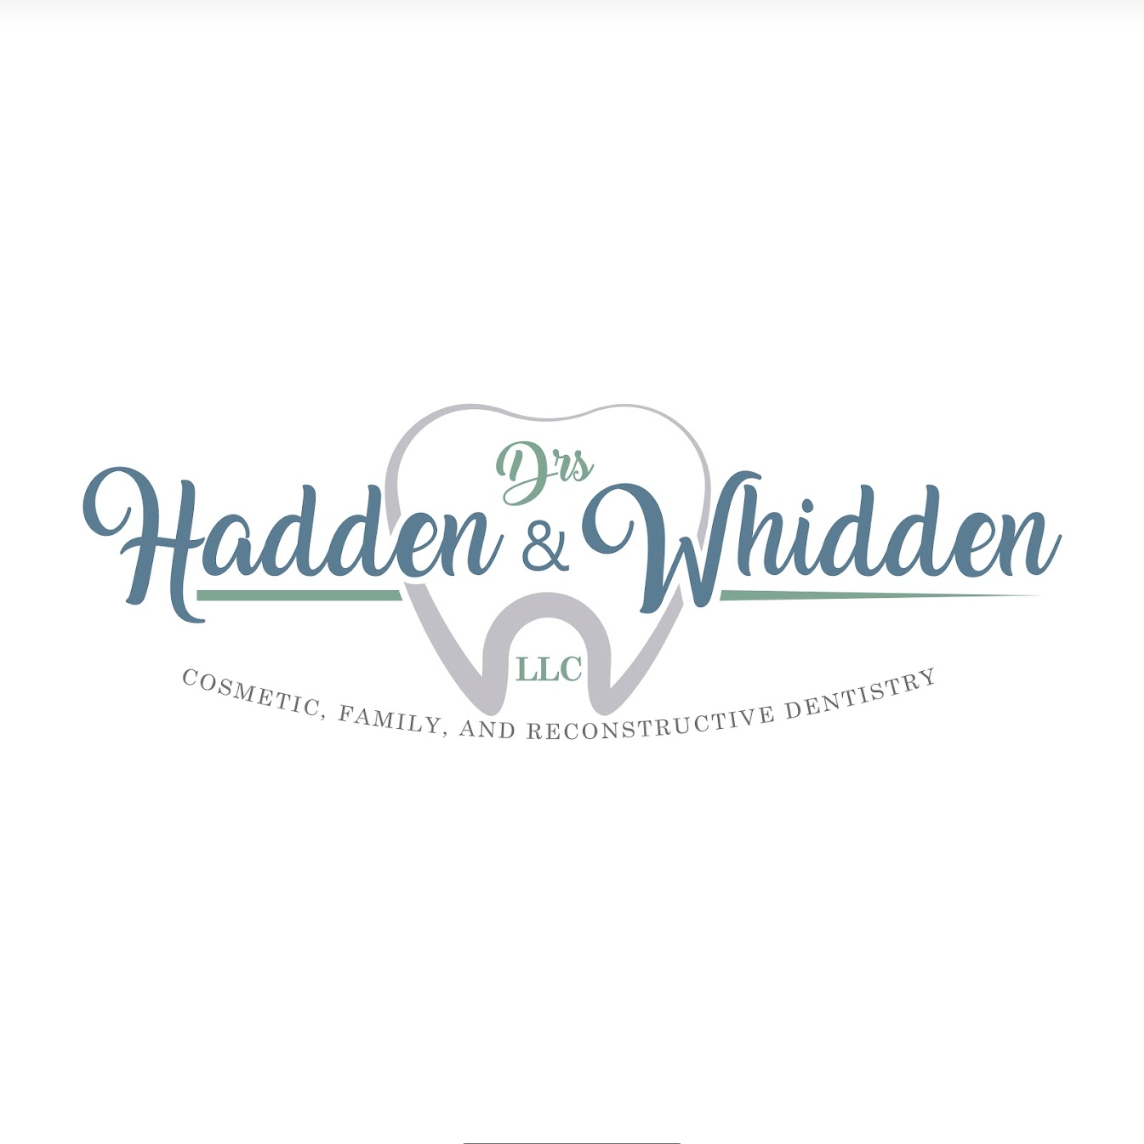 Drs. Hadden & Whidden, LLC | Coventry, CT